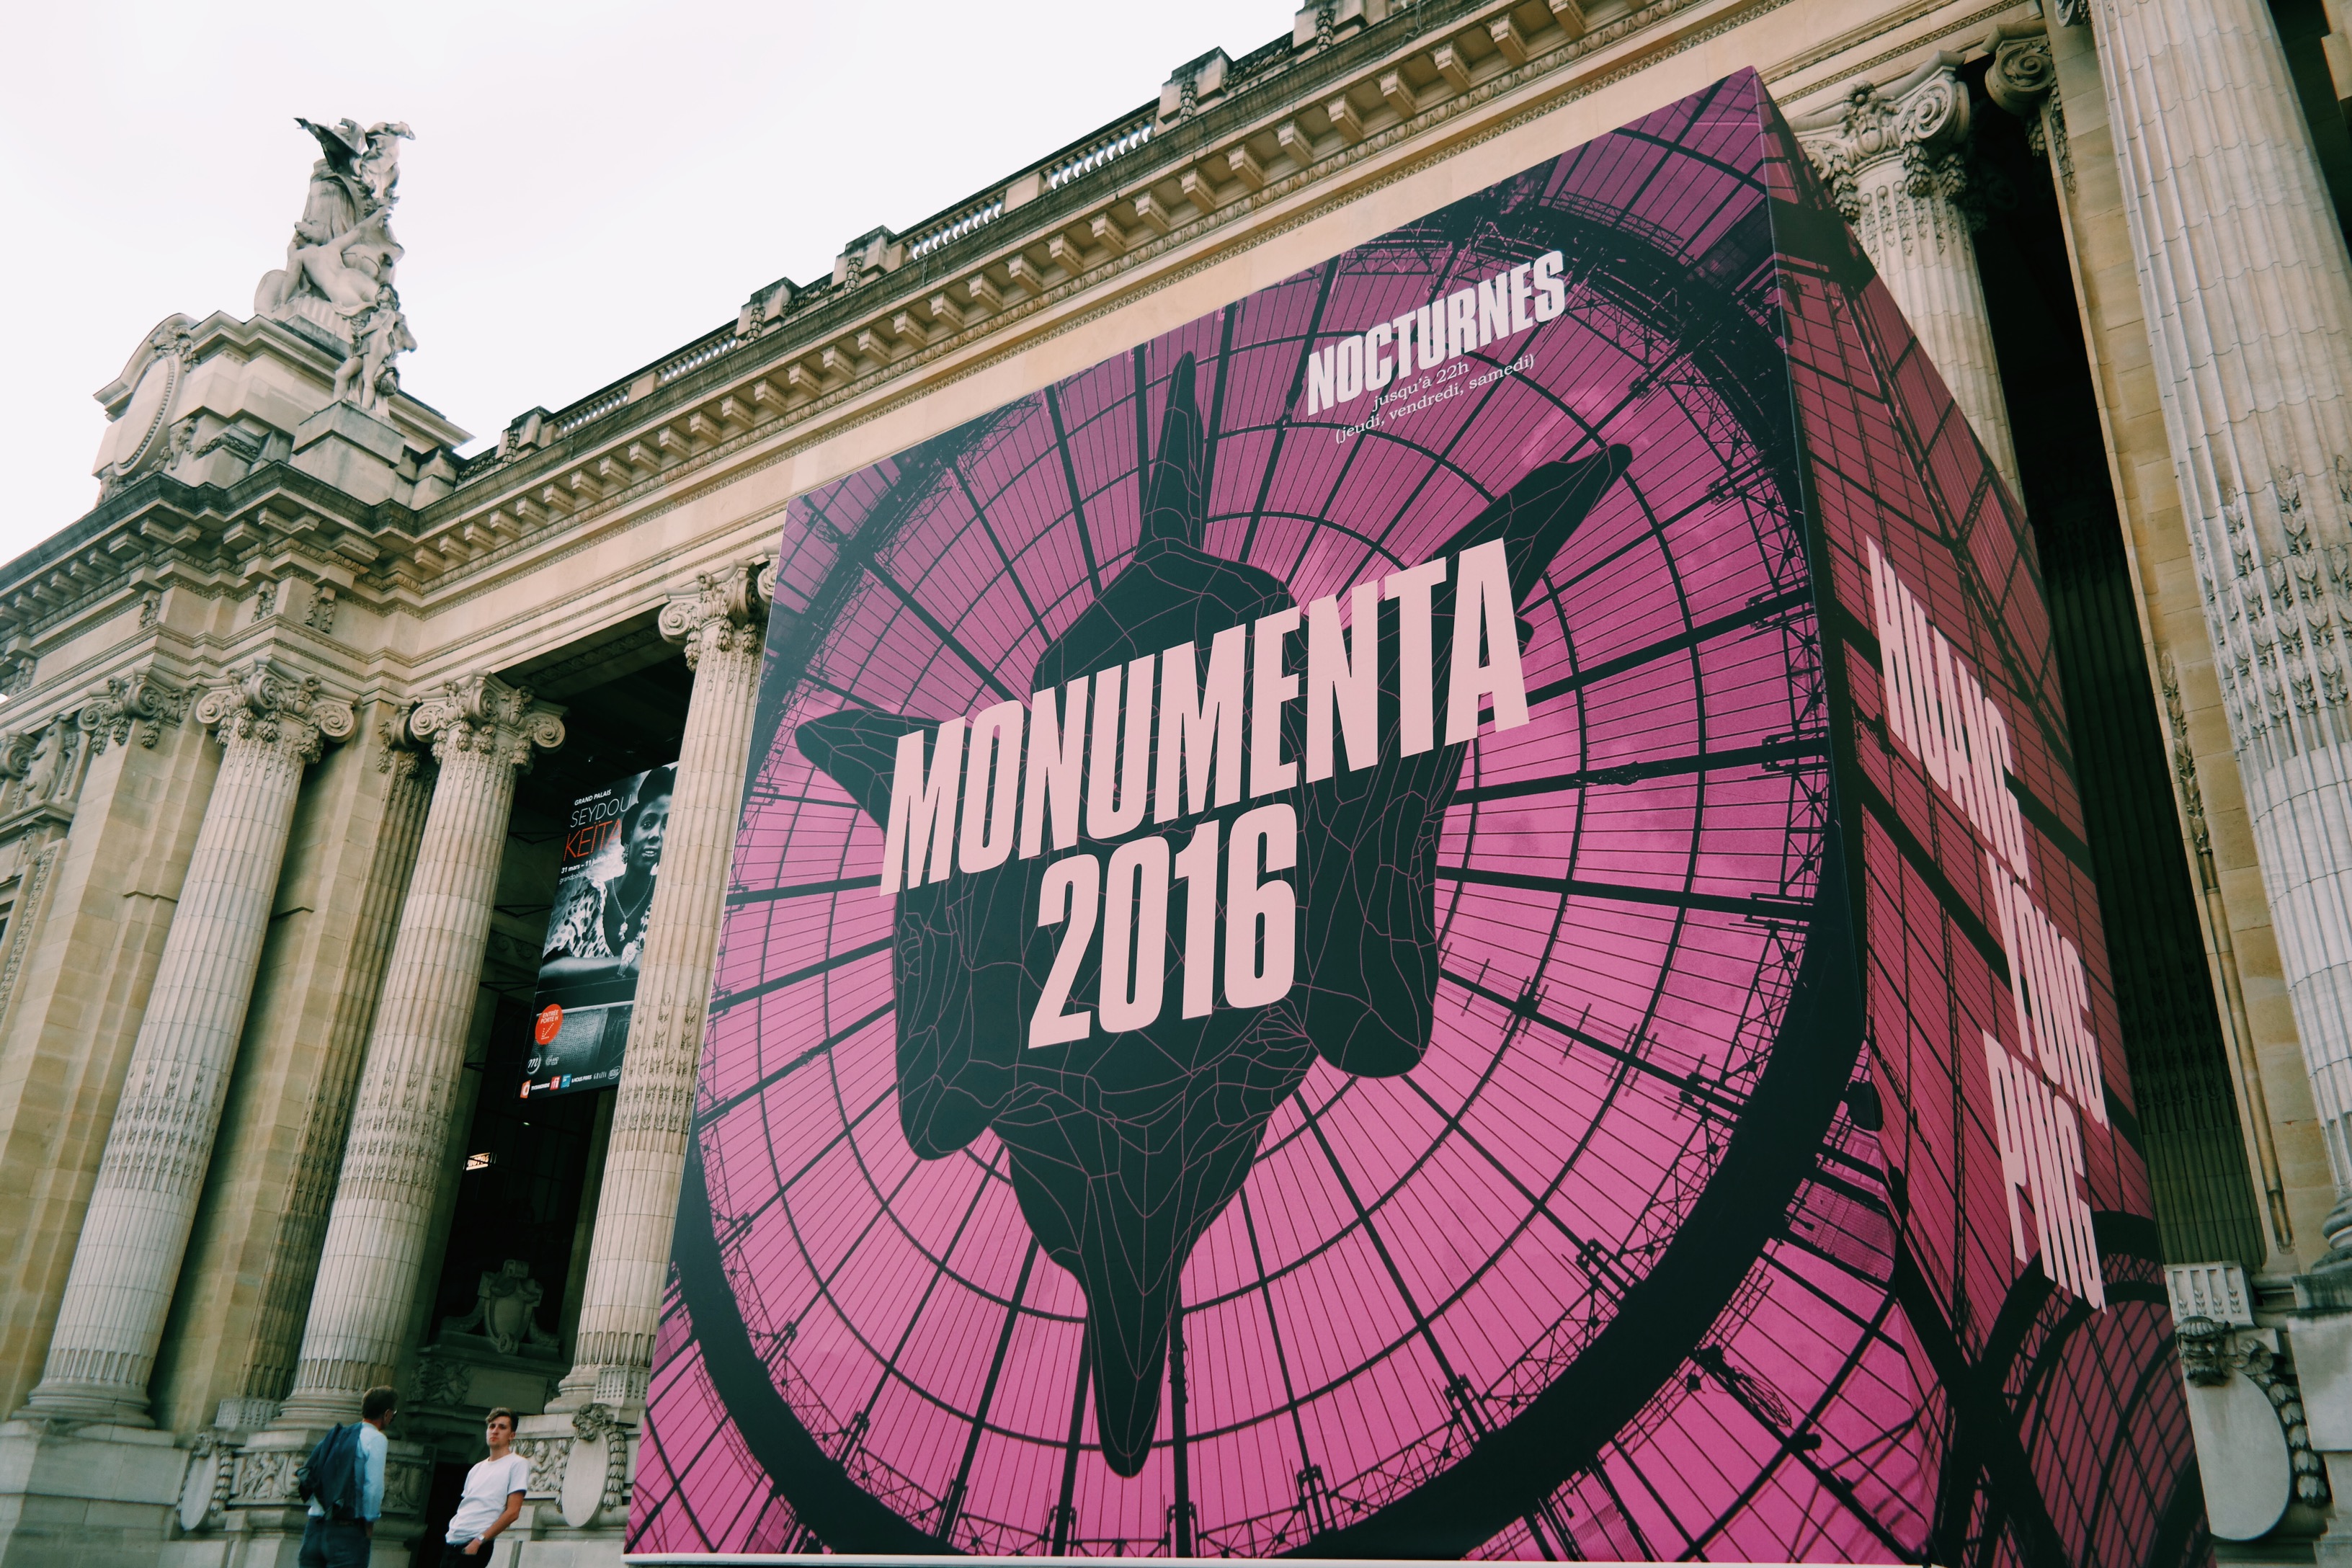 Monumenta-2016-Empires-Huang-Yong-Ping-Grand-Palais-Paris-affiche-entrée-Nef-Kamel-Mennour-photo-usofparis-blog